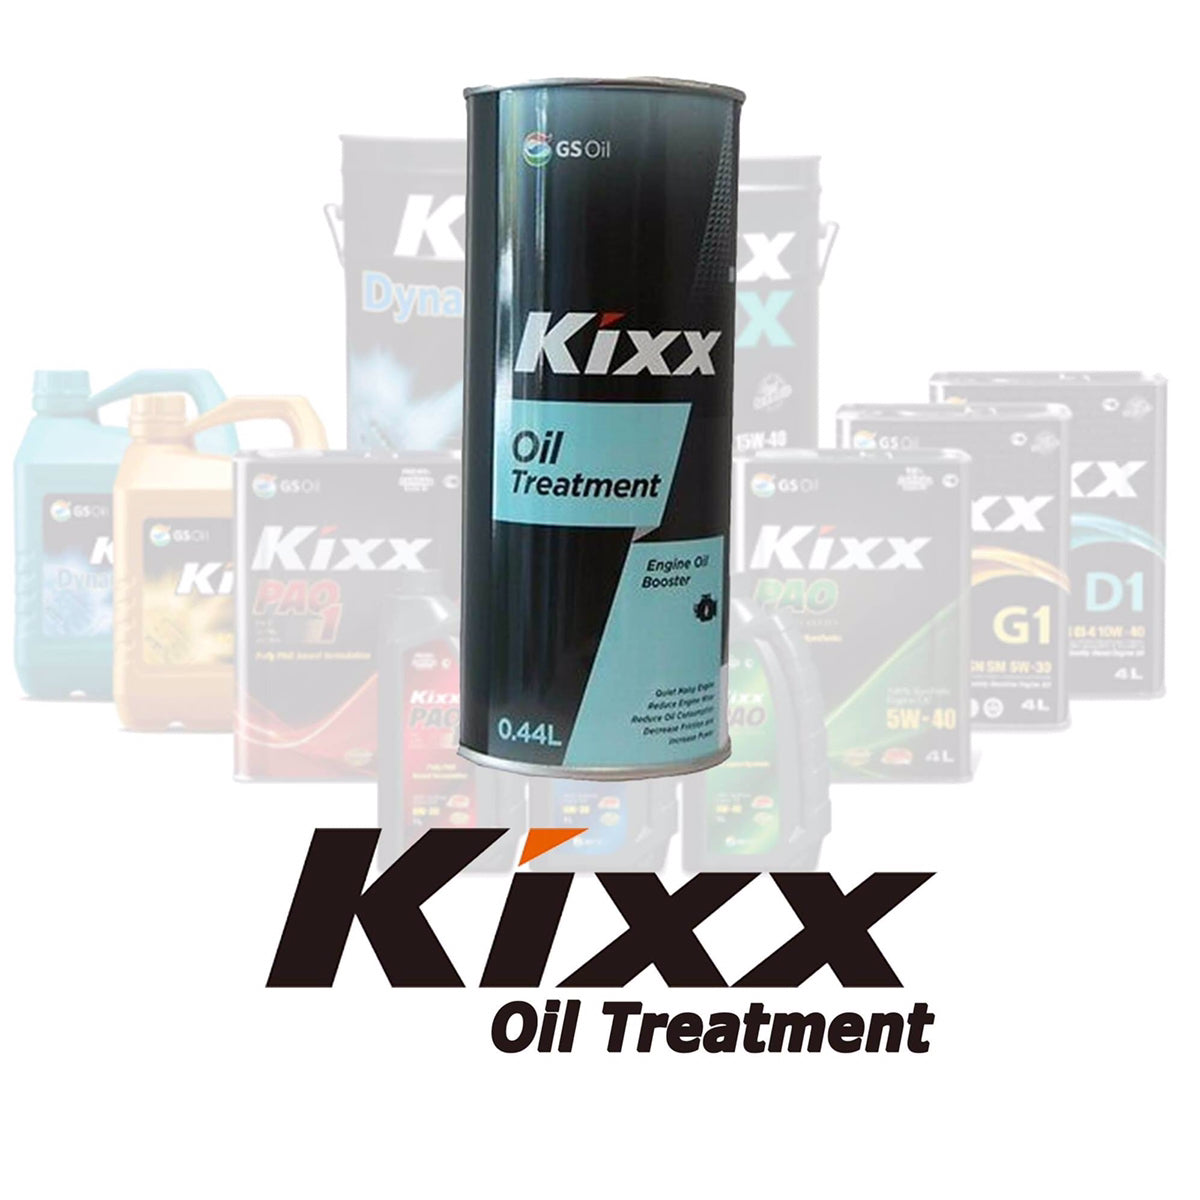 KIXX OIL TREATMENT-Made in Korea